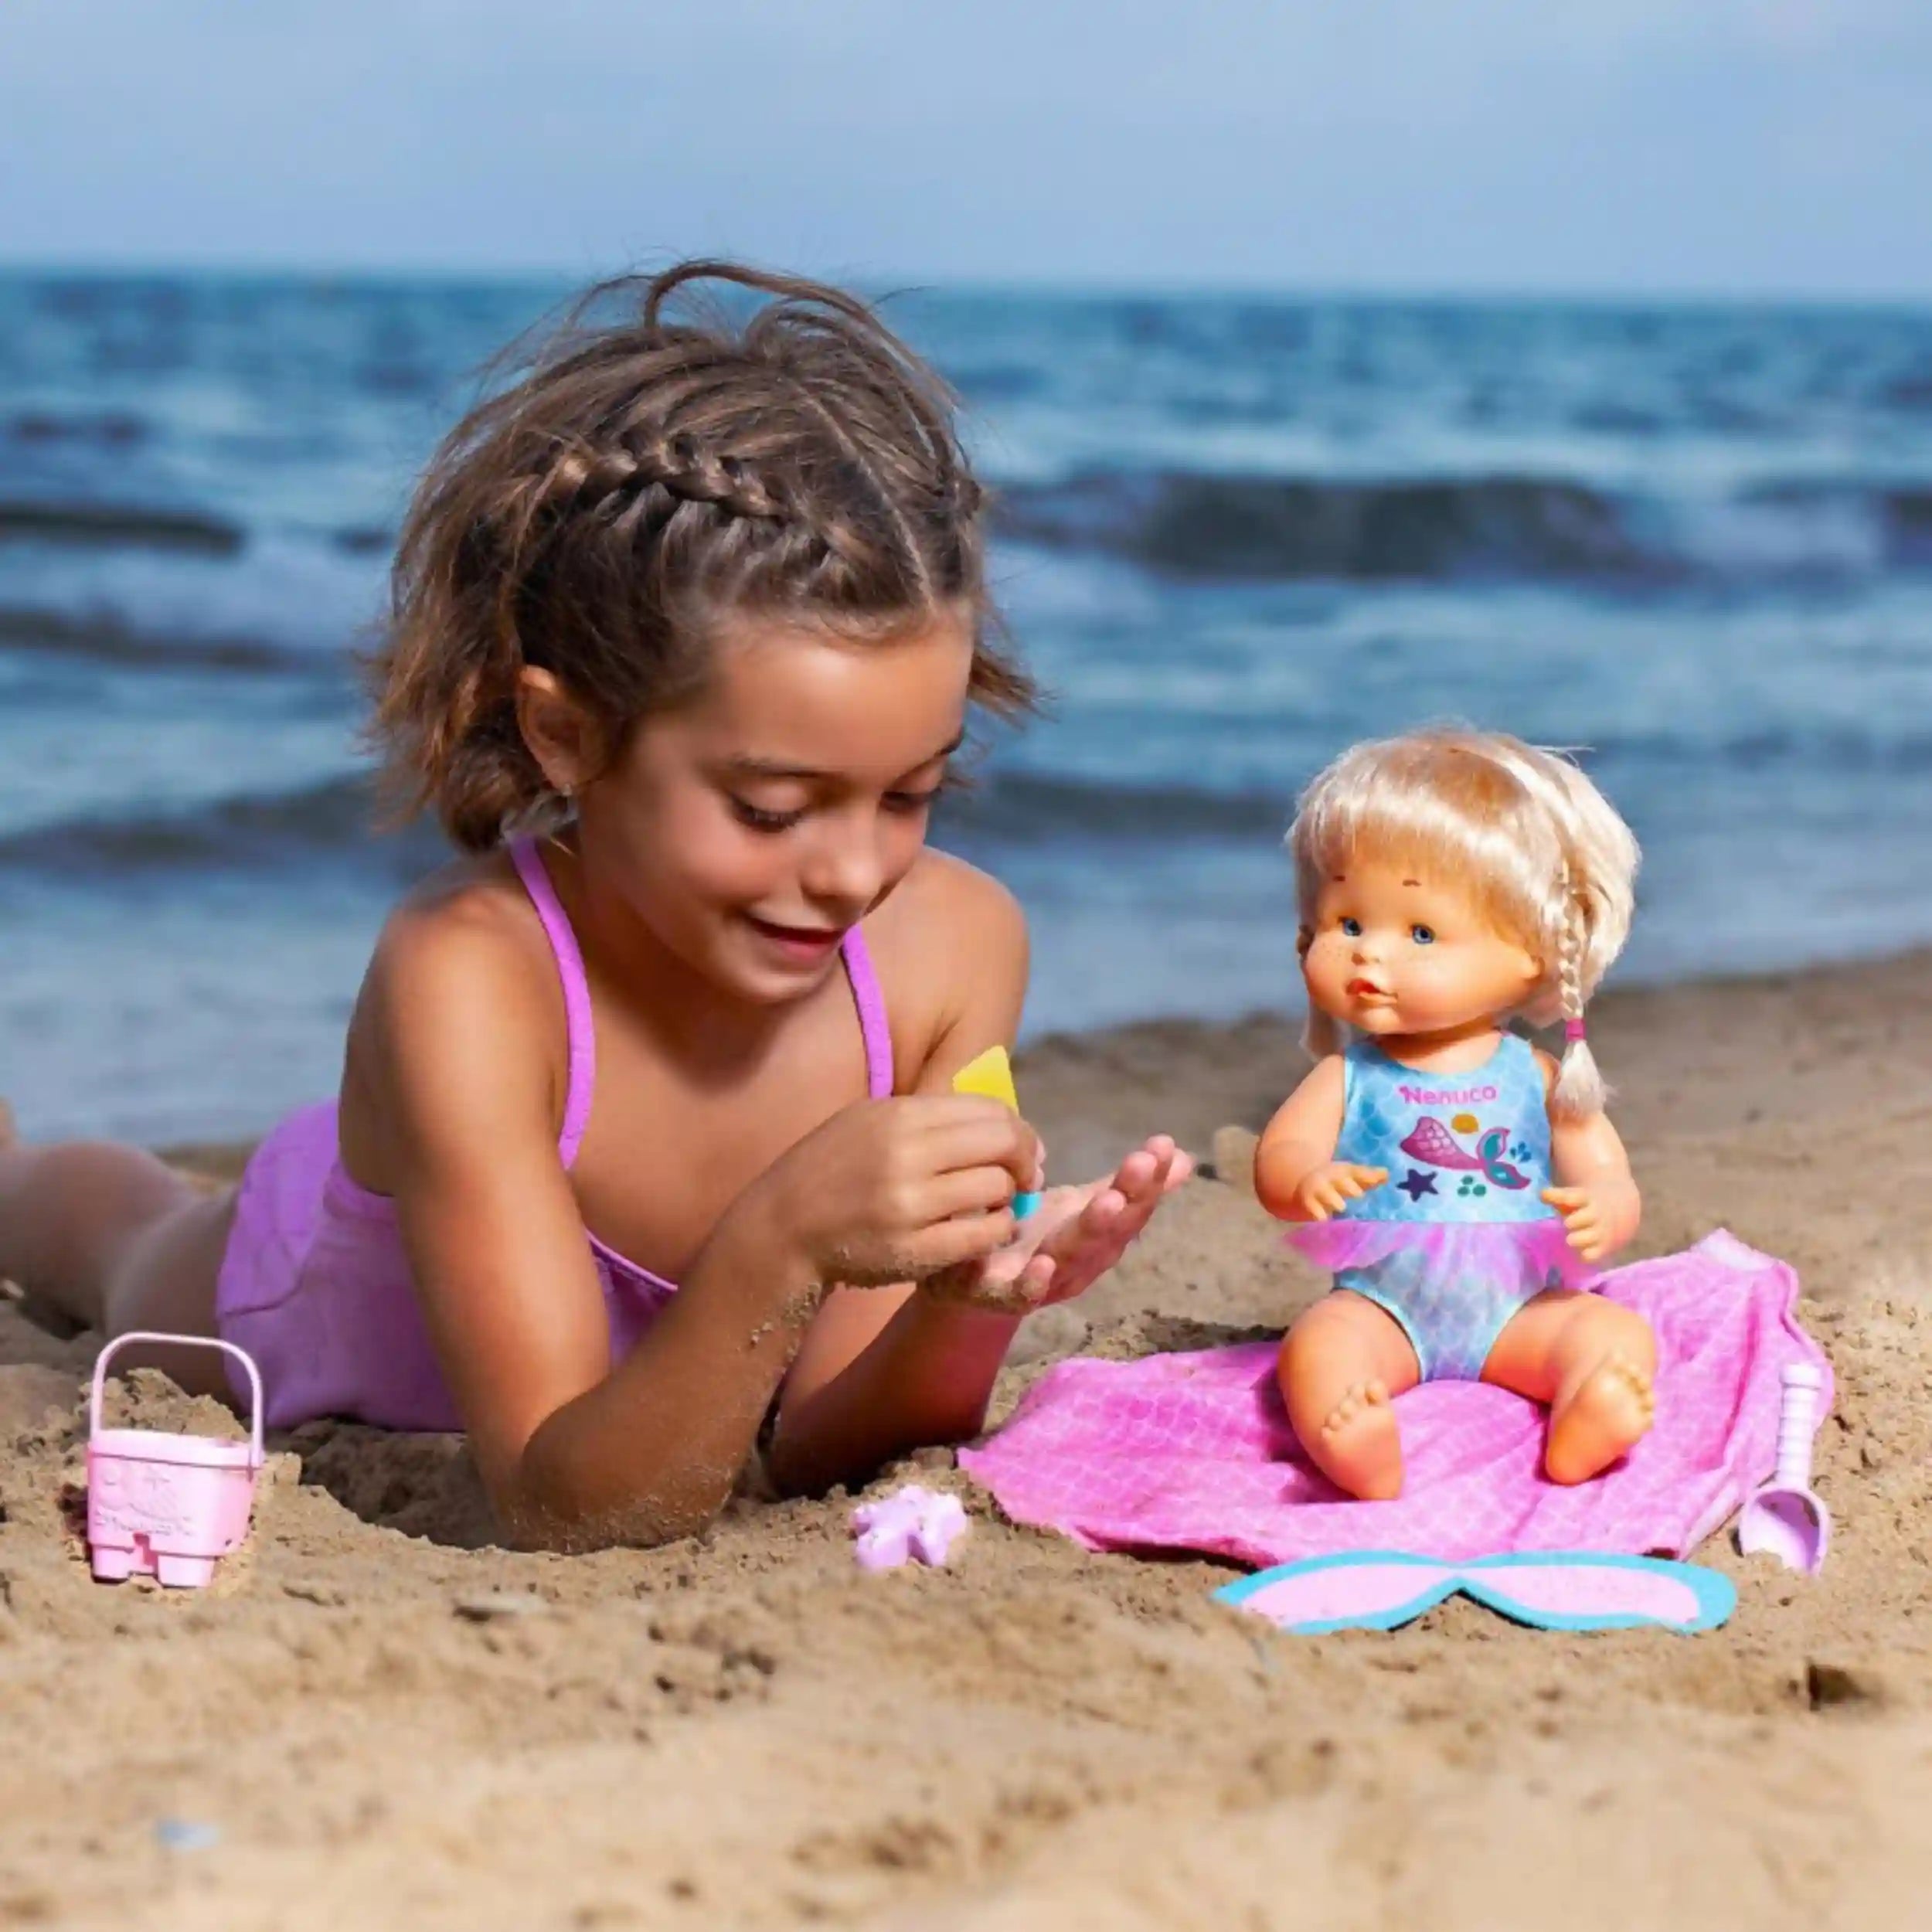 Famosa - Nenuco Mermaid Doll 35 cm